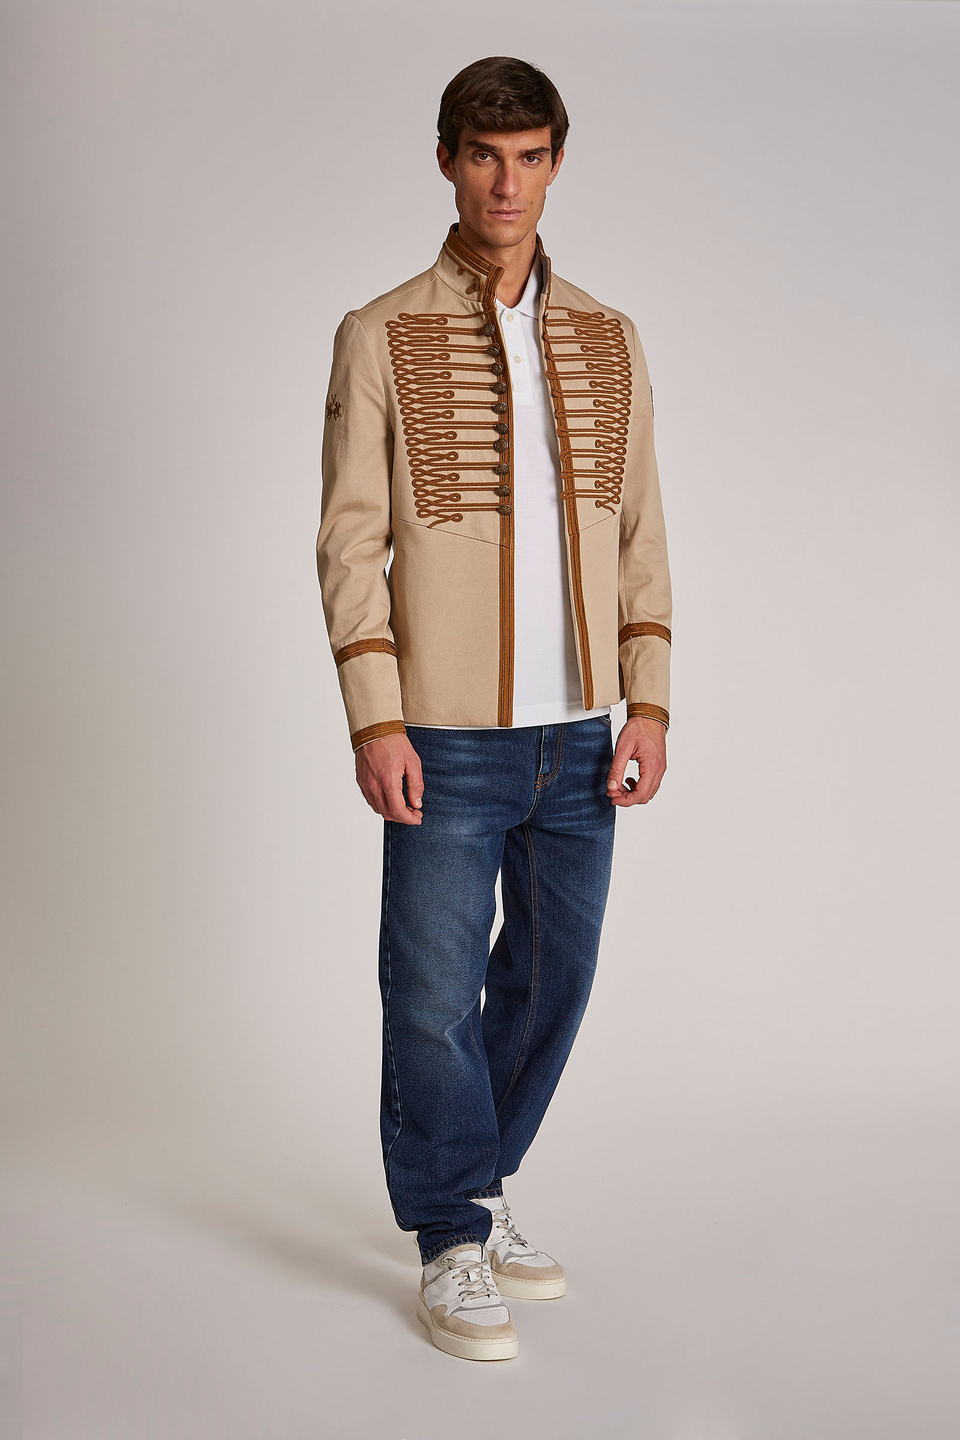 Chaqueta de hombre de algodón, modelo Royal British, corte regular | La Martina - Official Online Shop